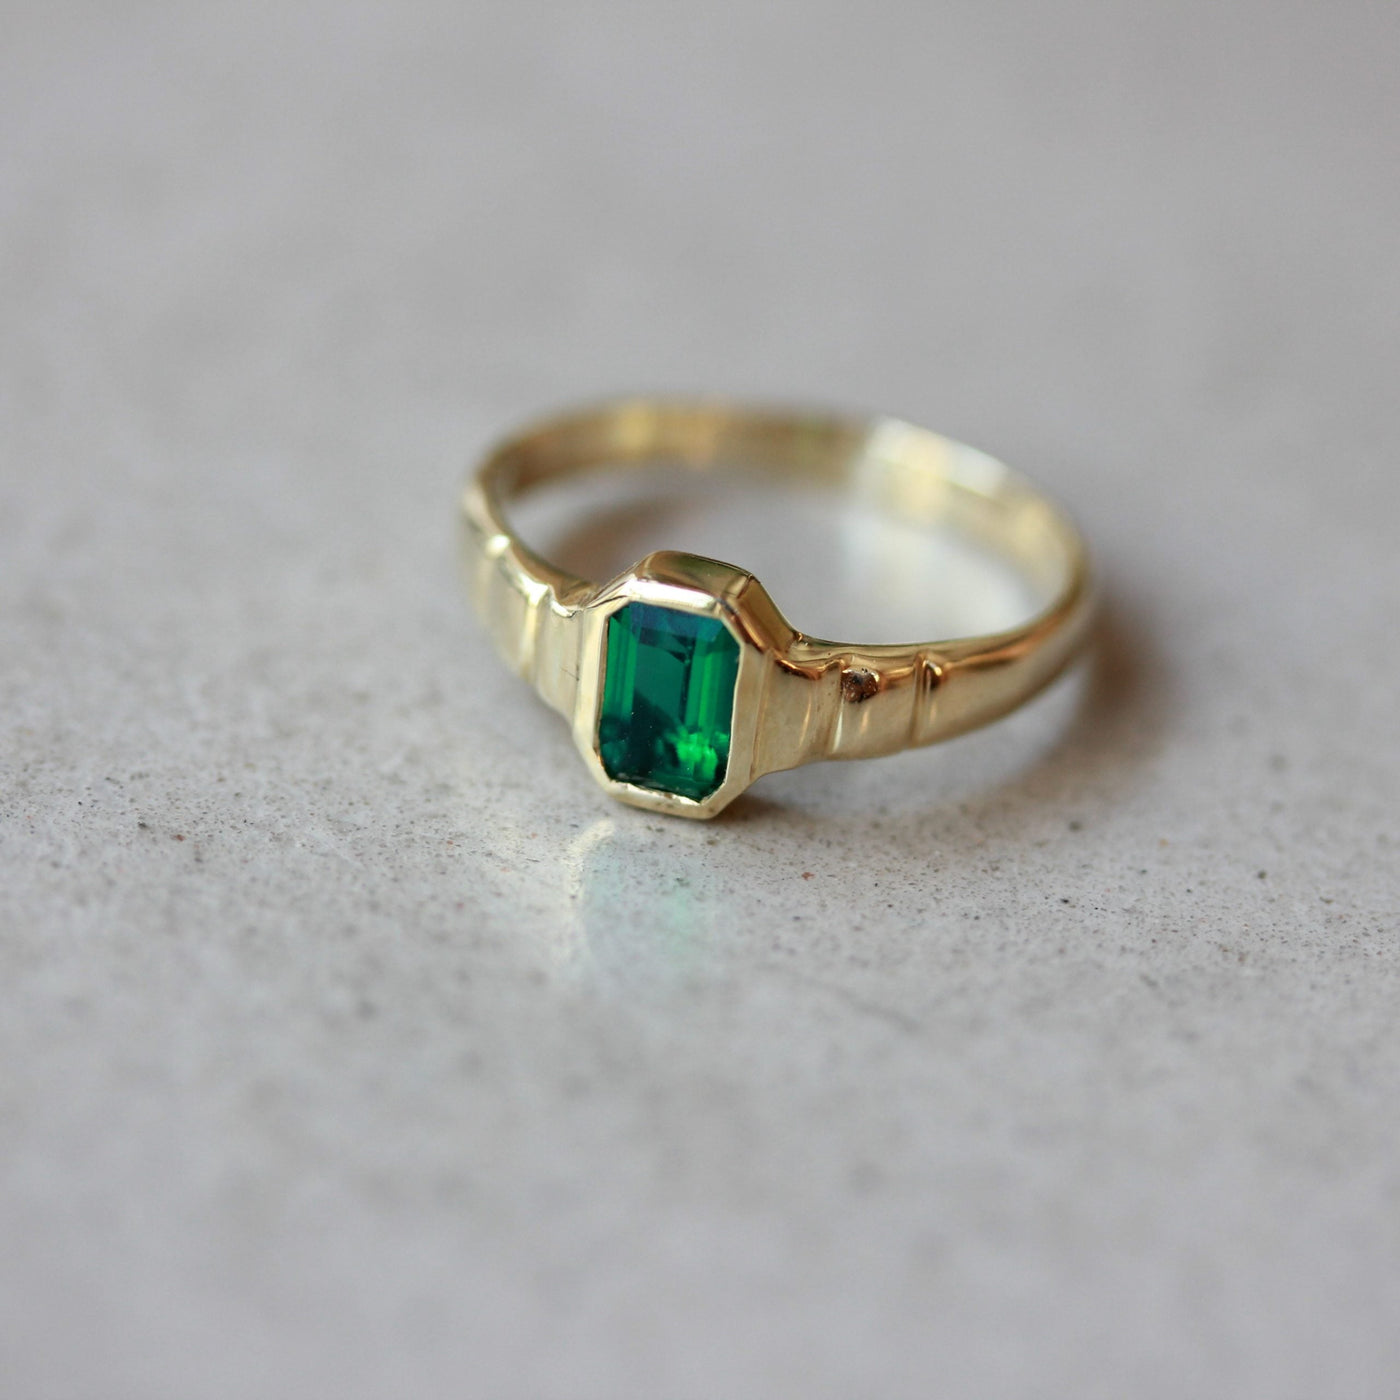 Thomas Ring 14K Gold Emerald Rings 